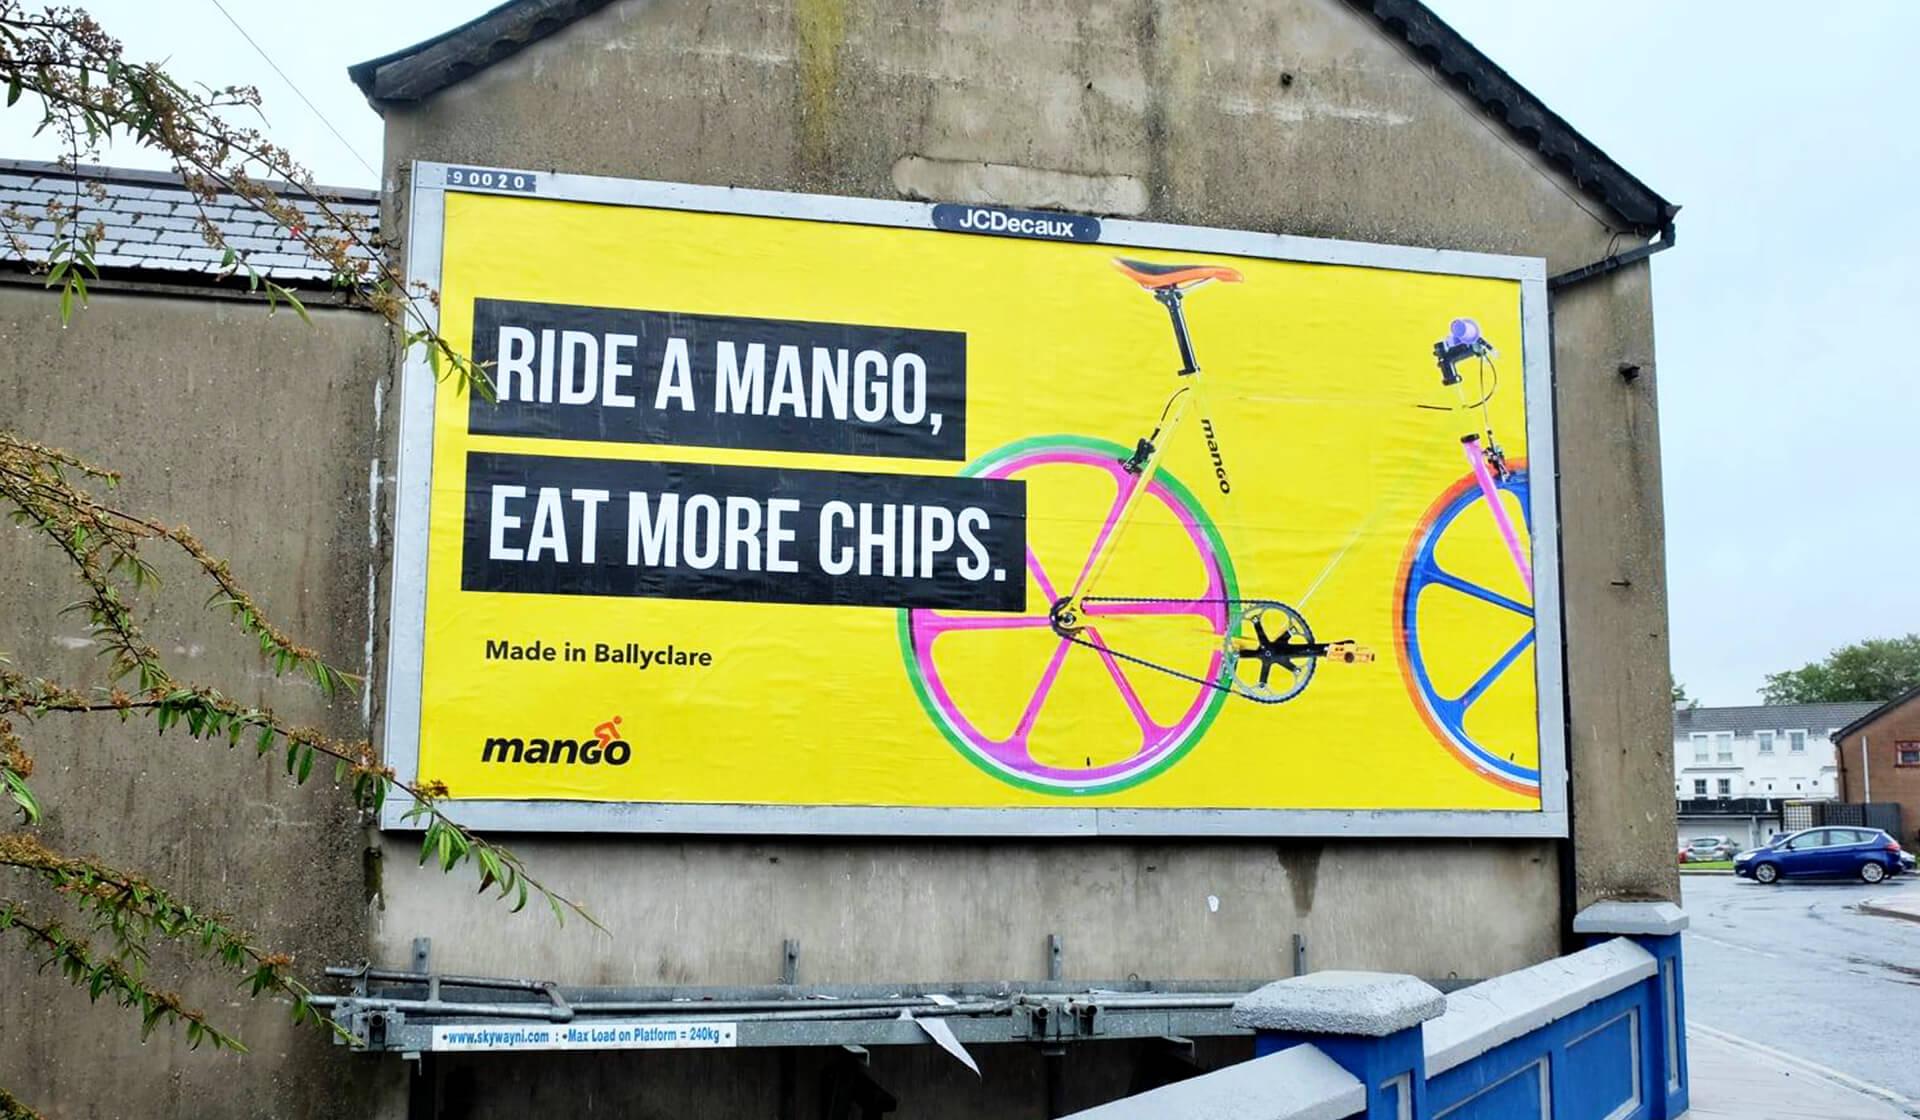 Mango Bikes - Eat More Chips - Mellor&Smith